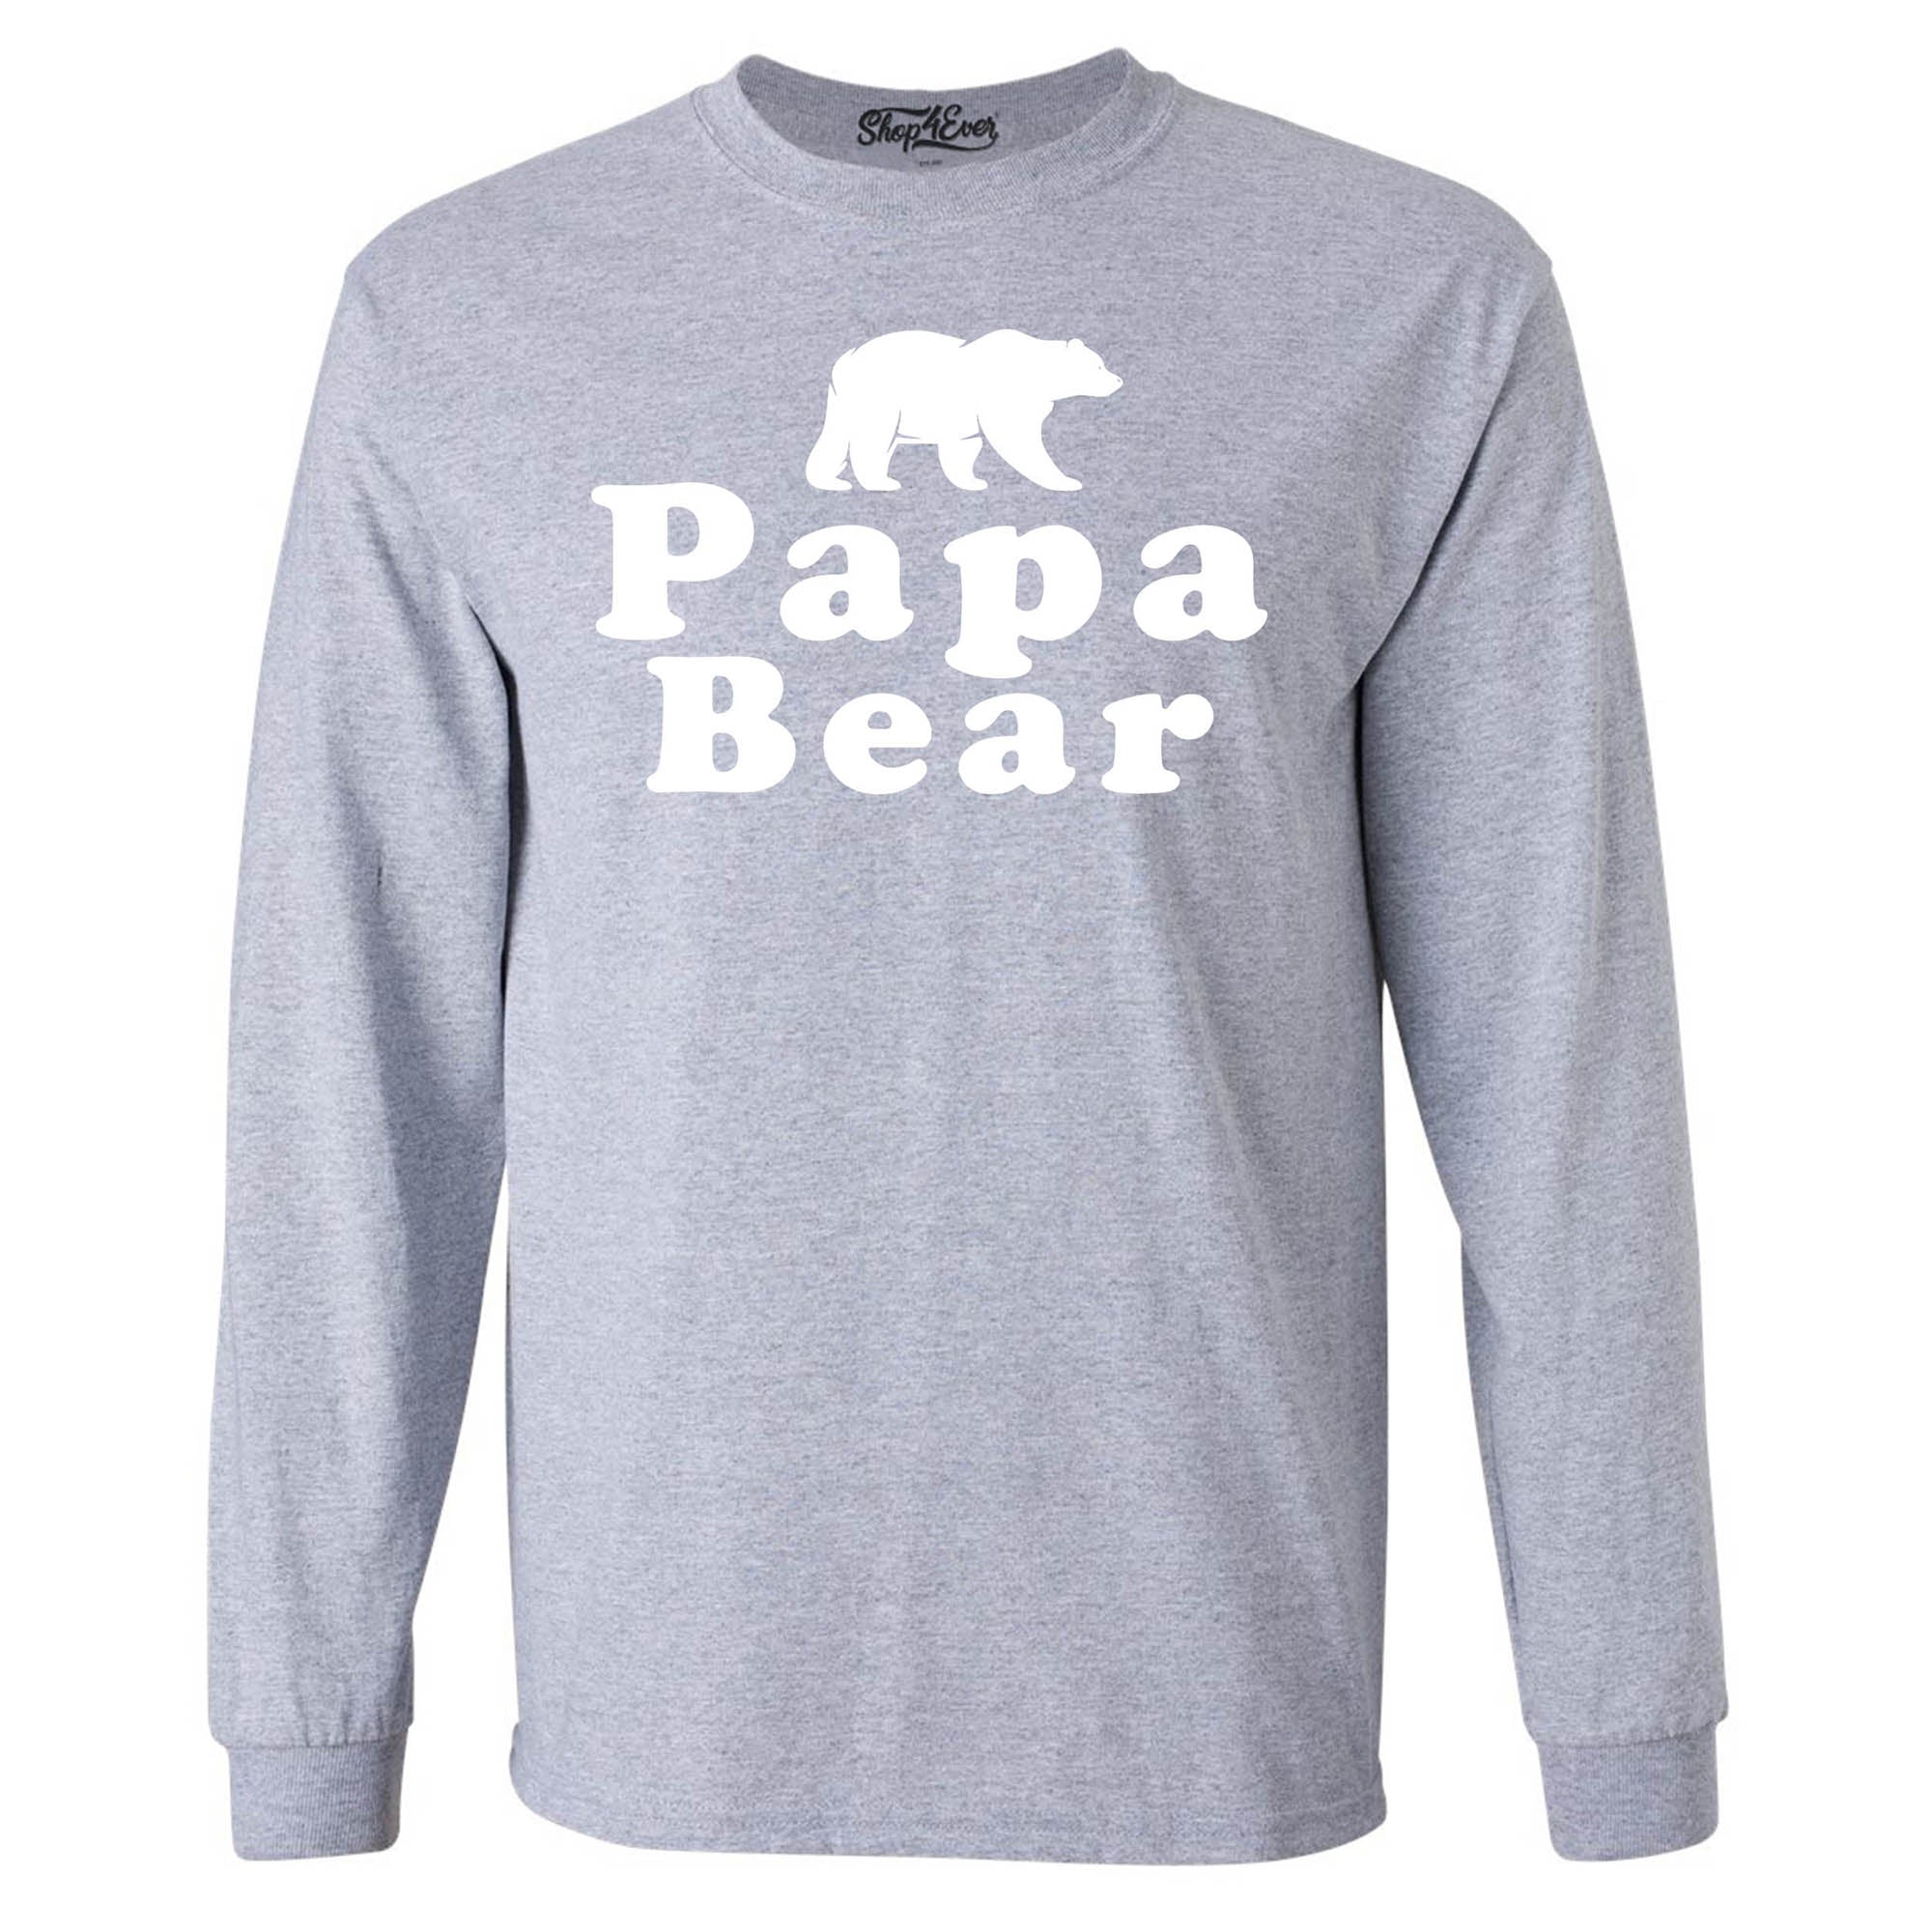 Papa Bear Long Sleeve Shirt Couples Shirts